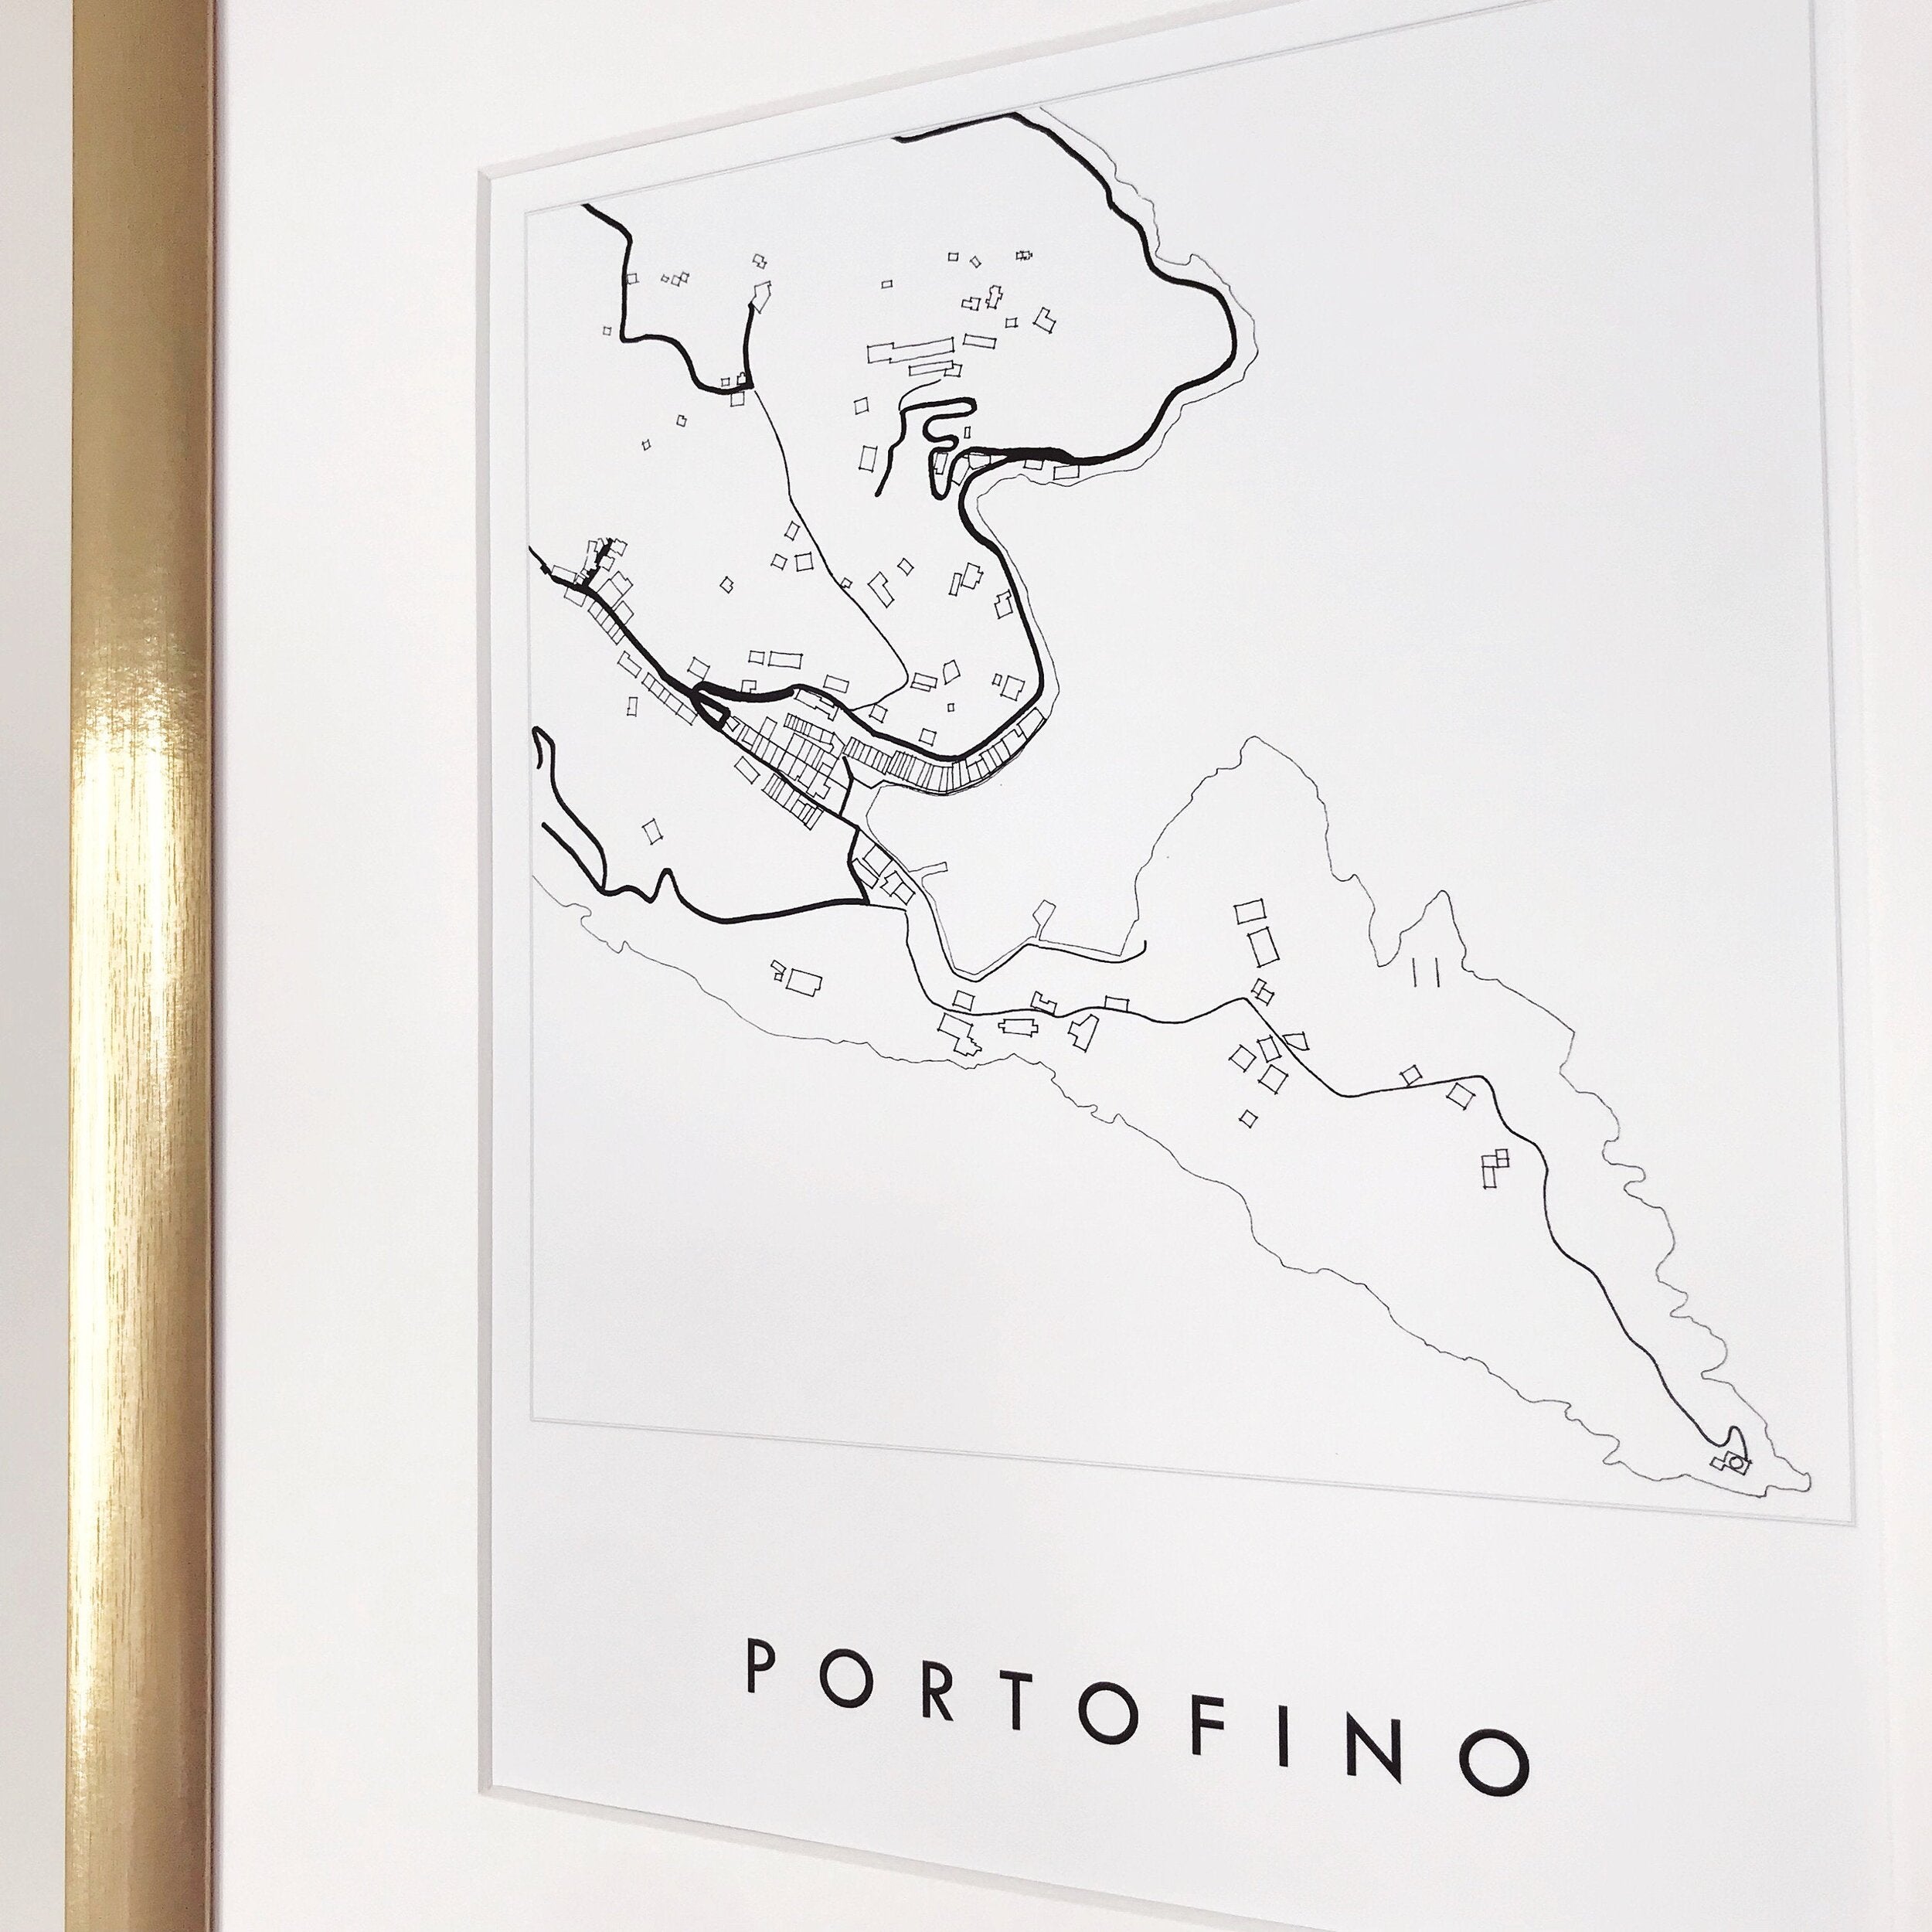 PORTOFINO City Lines Map: PRINT